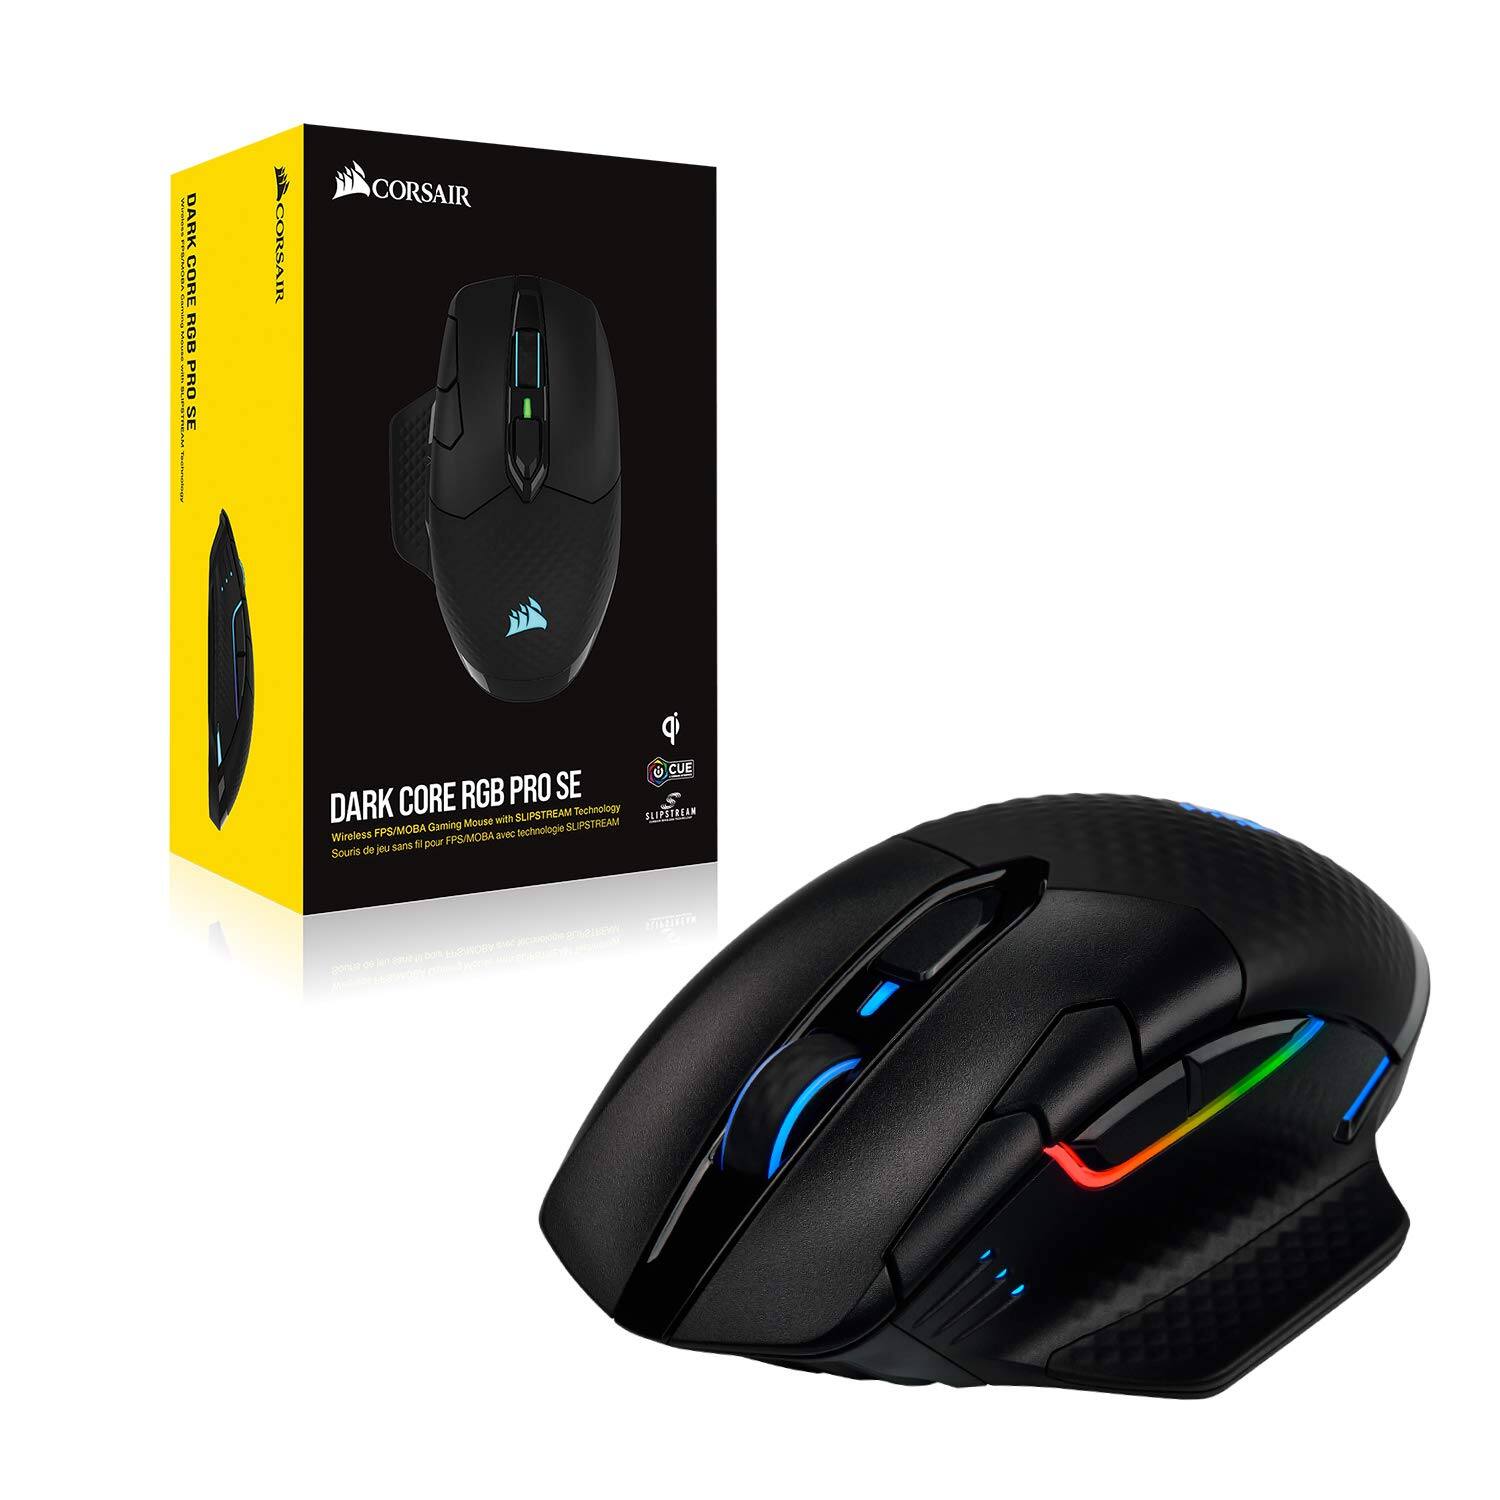 Corsair Dark Core RGB Pro SE Wireless Gaming Mouse w/ Qi Charging (Refurbished) $43 + Free Shipping